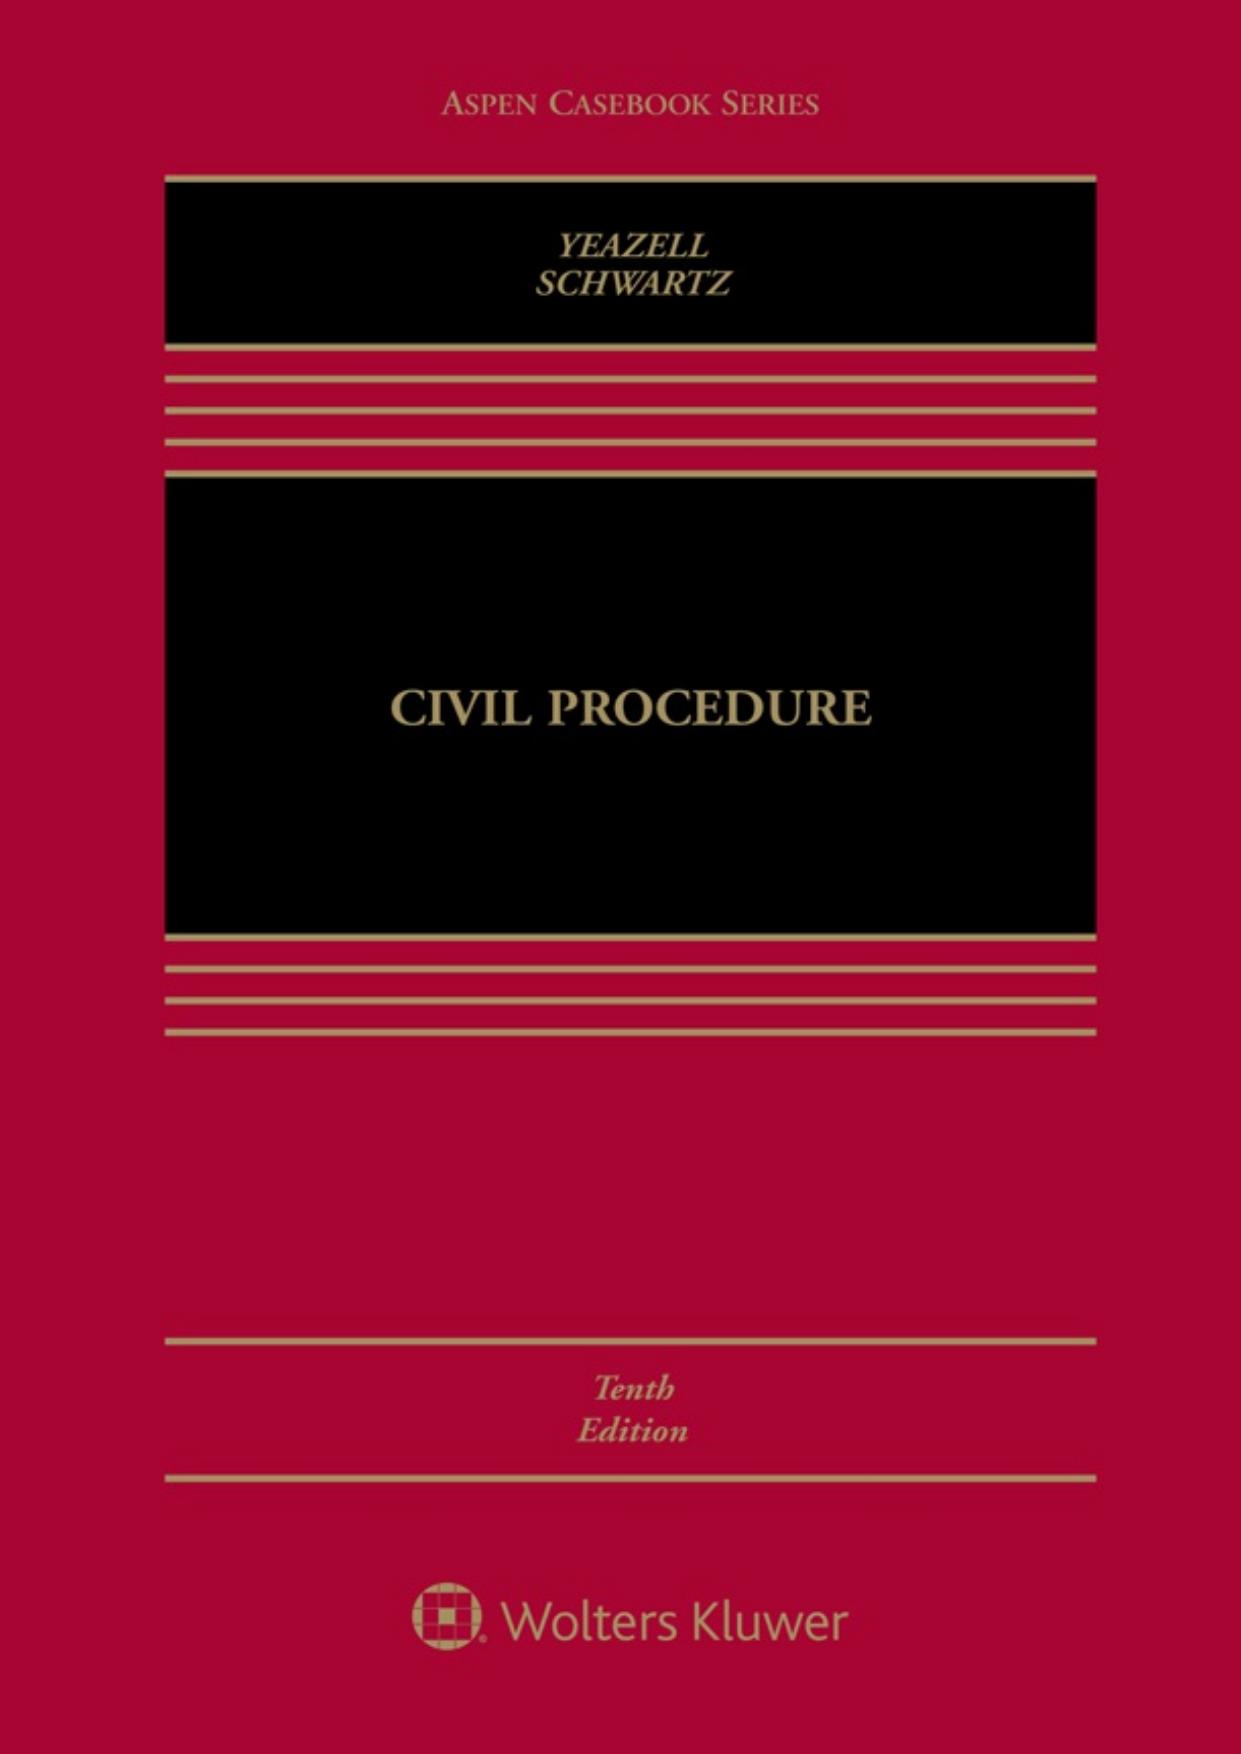 Civil Procedure (Aspen Casebook Series) - Stephen C. Yeazell & Joanna C. Schwartz.jpg